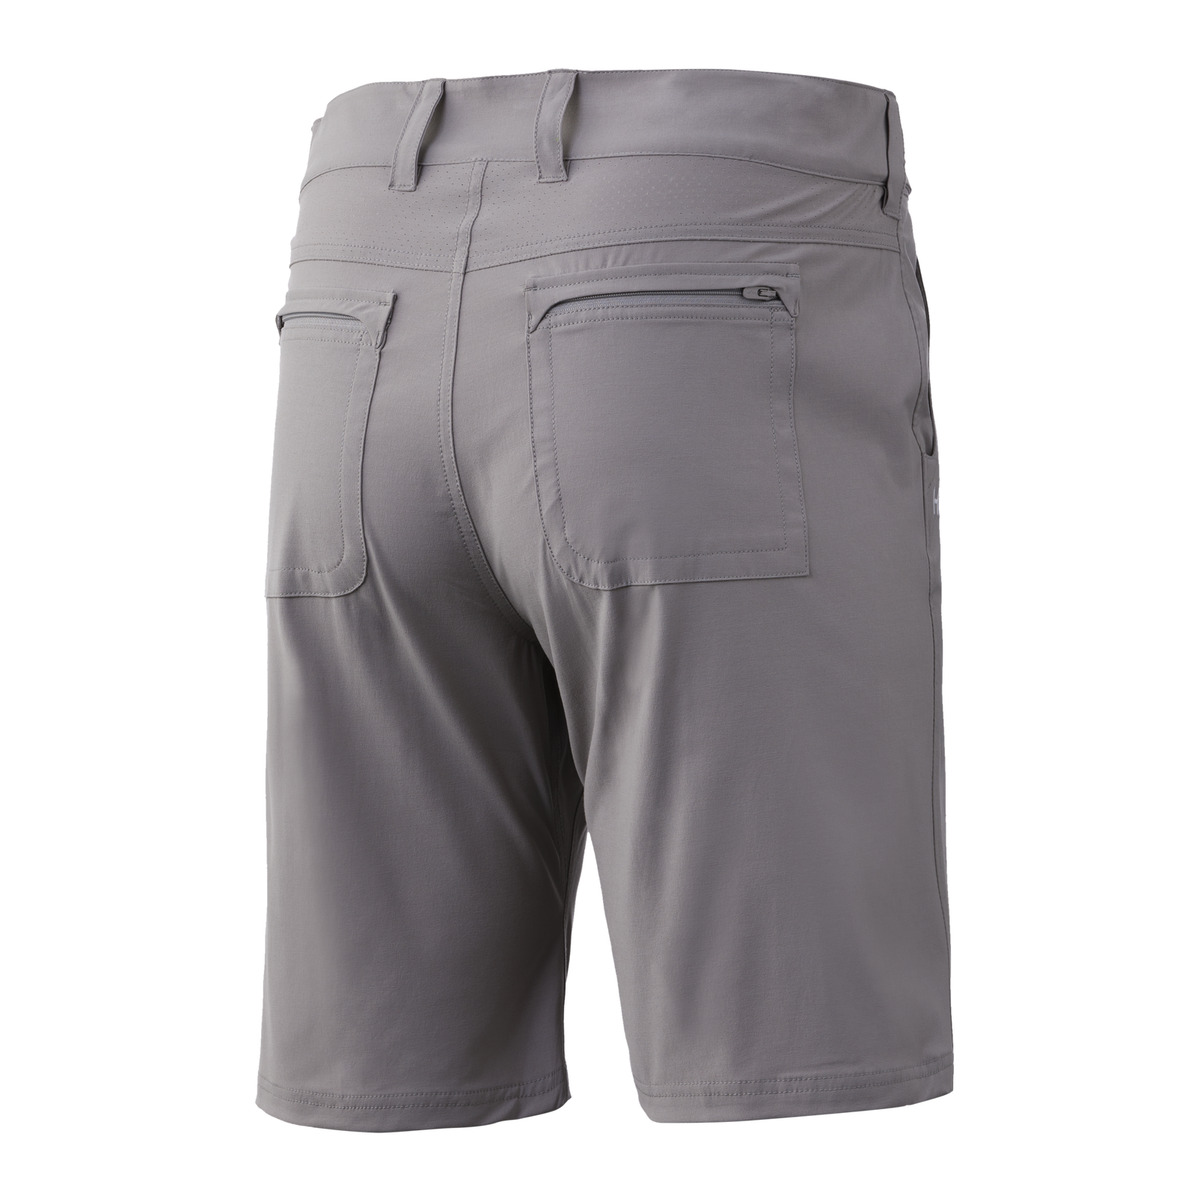 Huk Next Level 10.5 Shorts H2000011 - Choose Size / Color